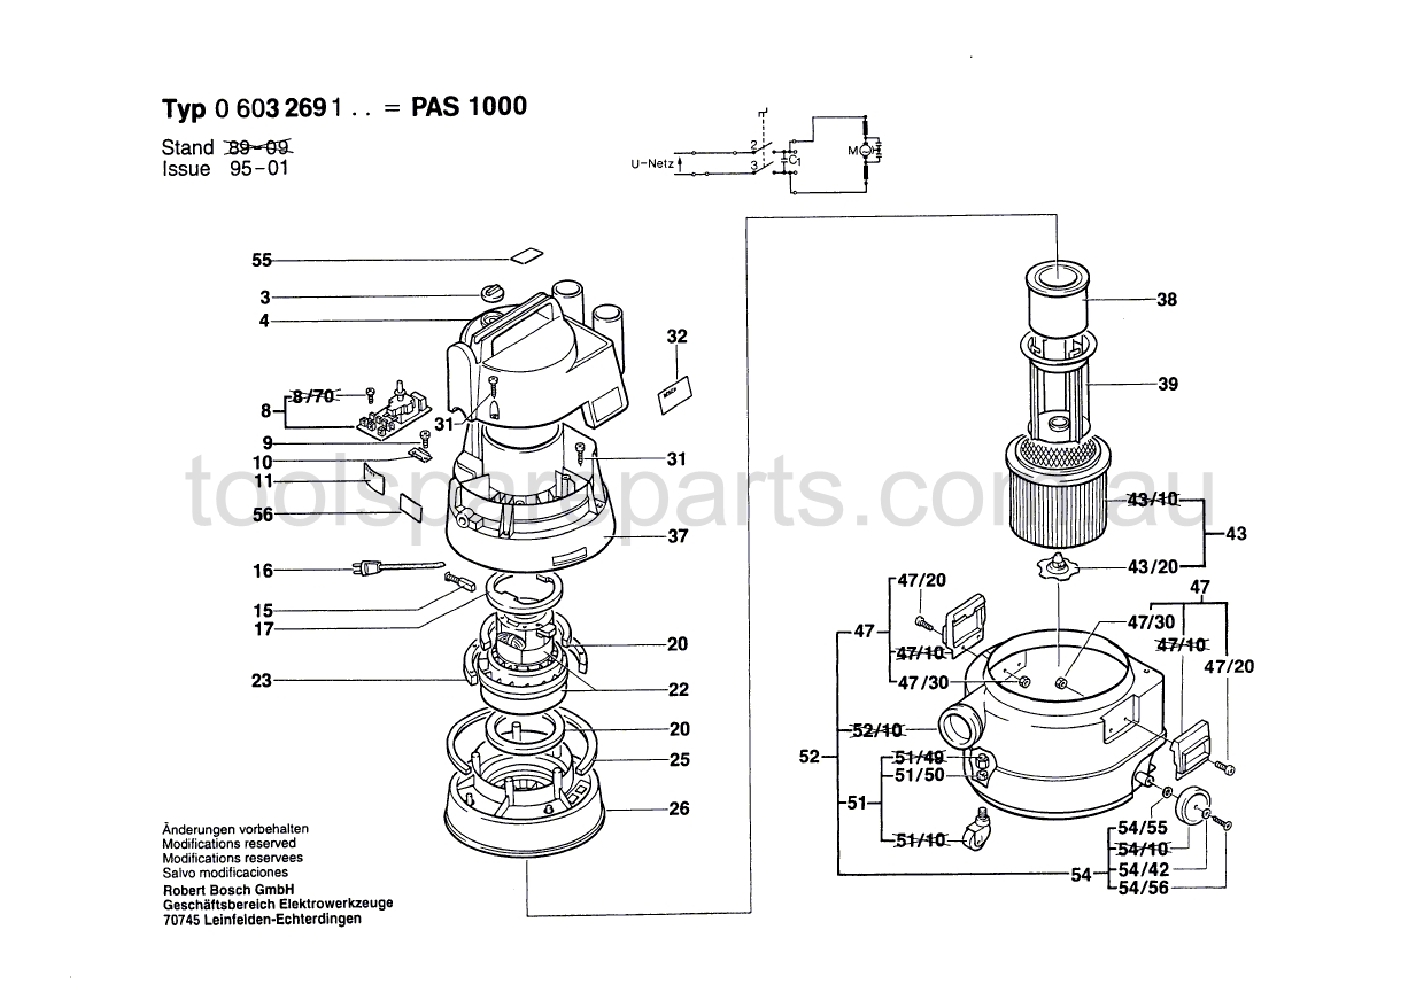 Bosch PAS 1000 0603269137  Diagram 1